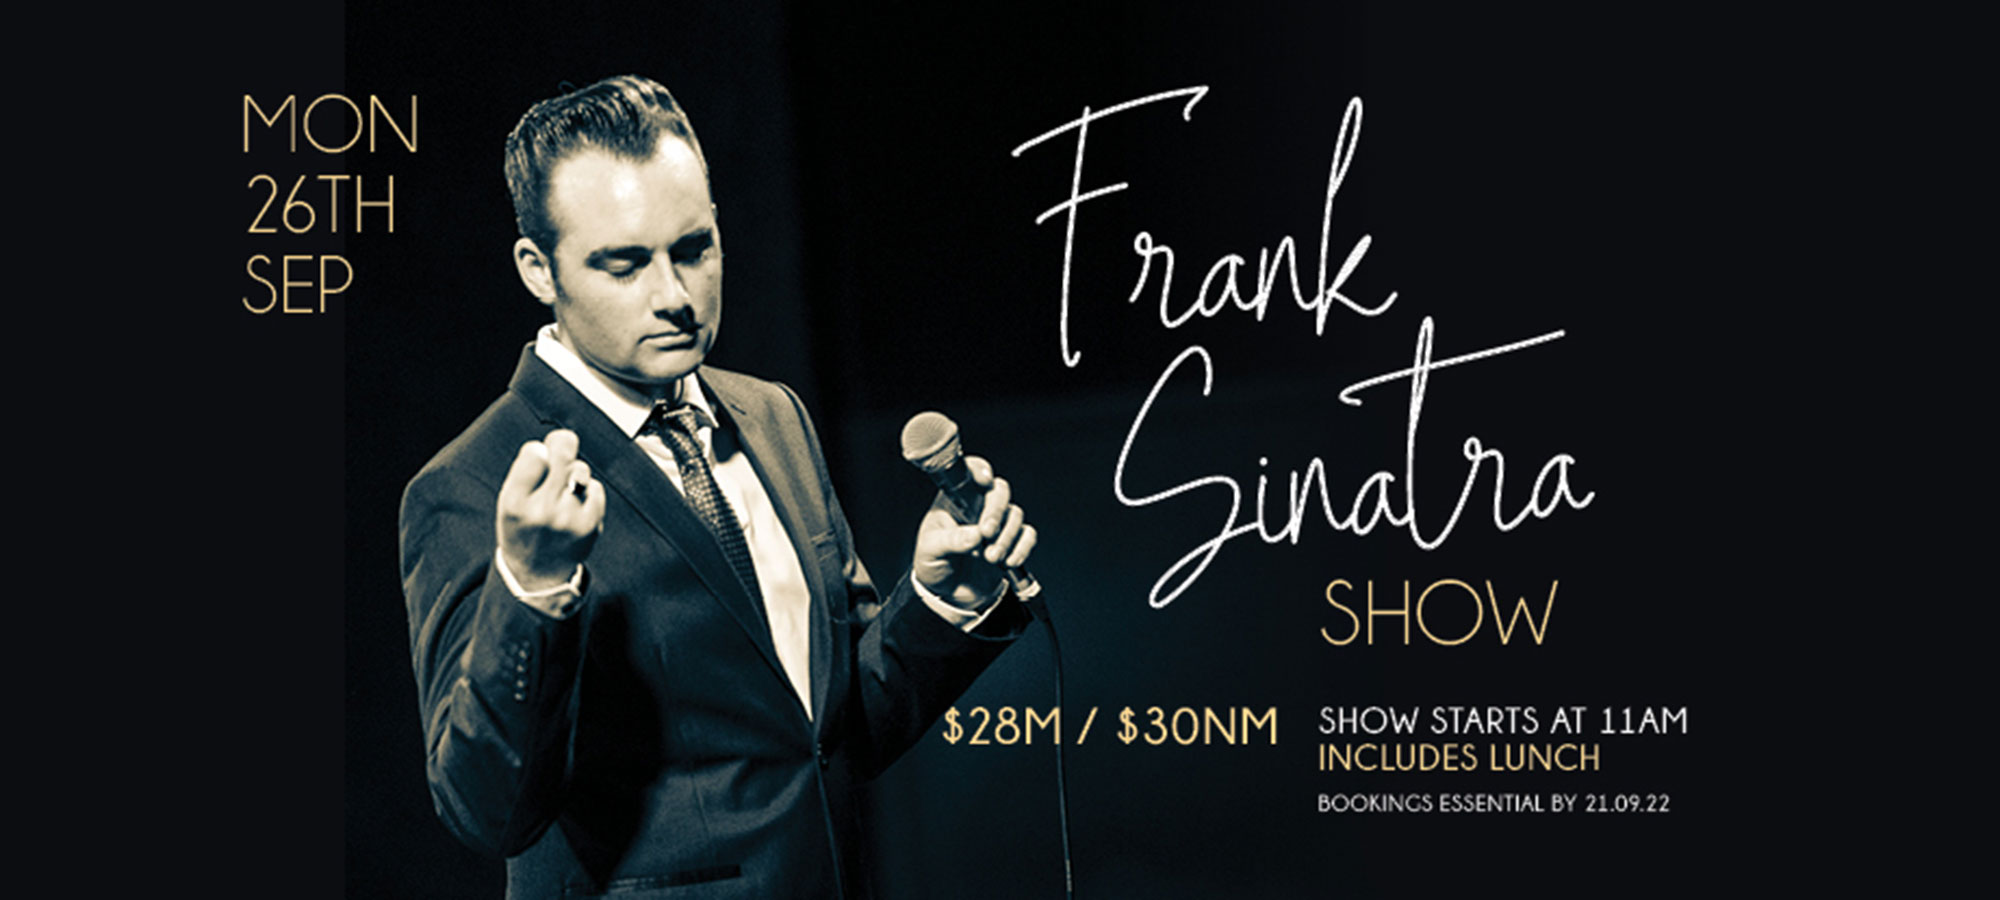 Frank Sinatra Show